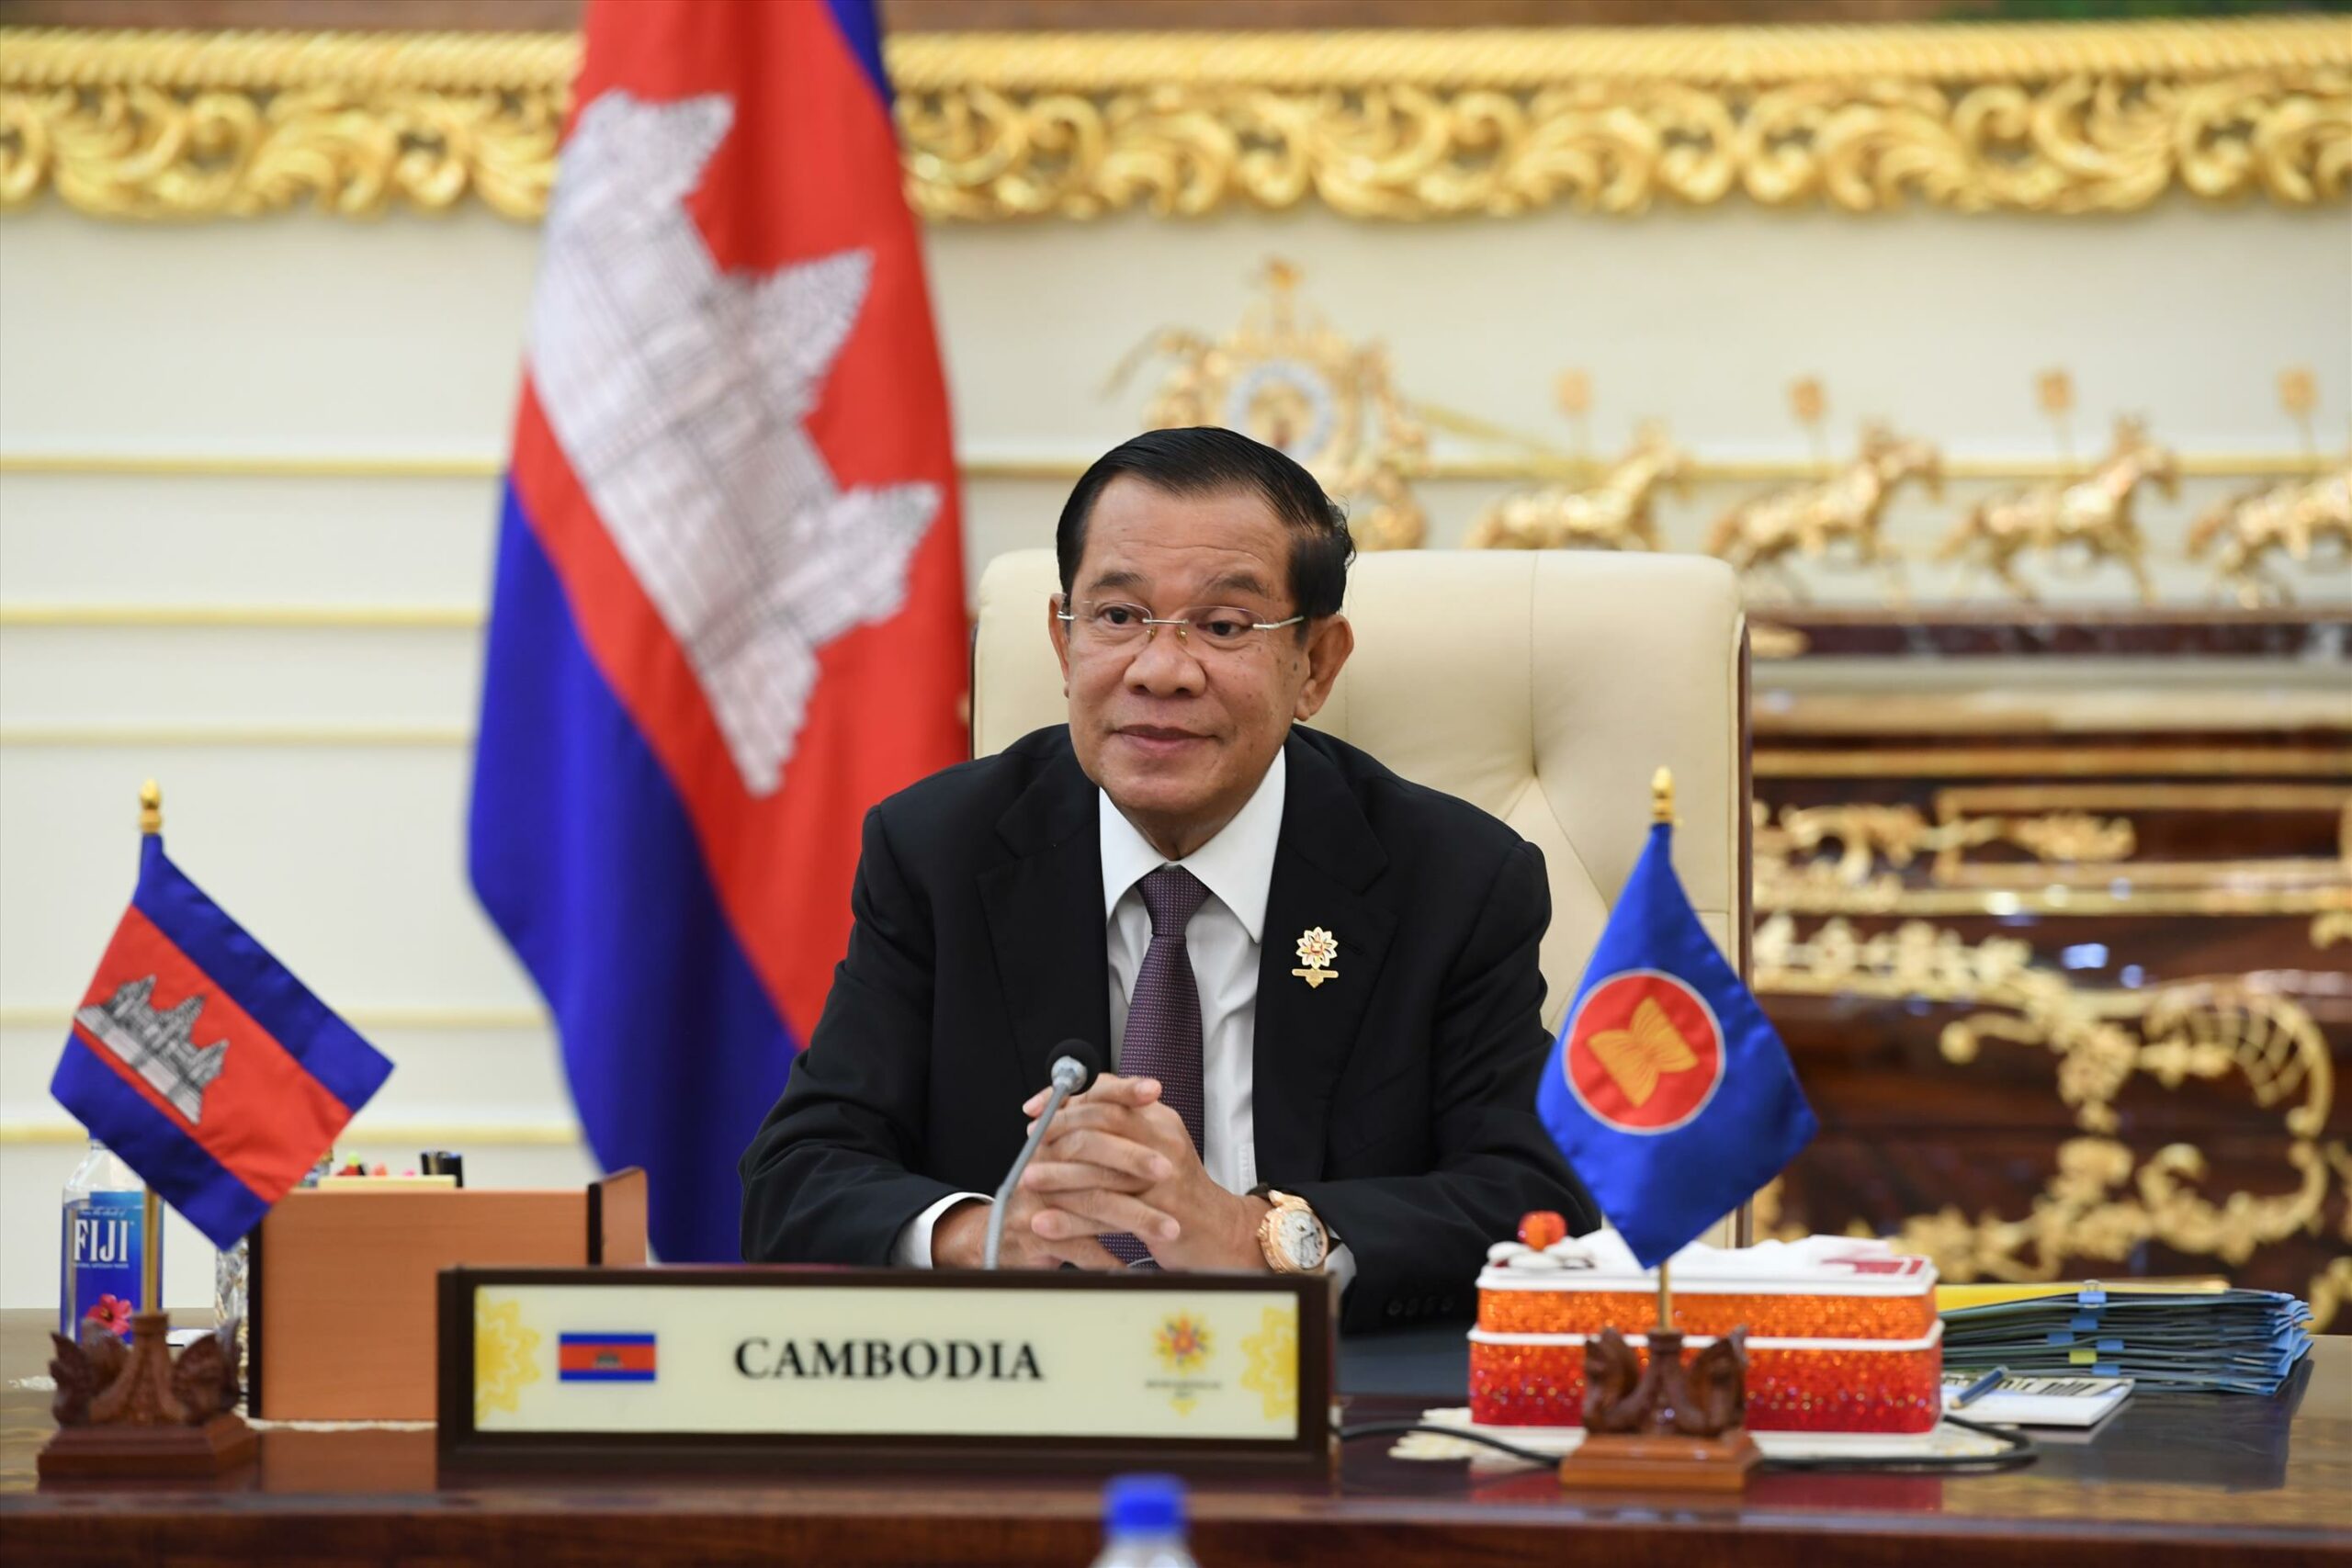 PM Hun Sen highlights need for Asean to admit Timor Leste